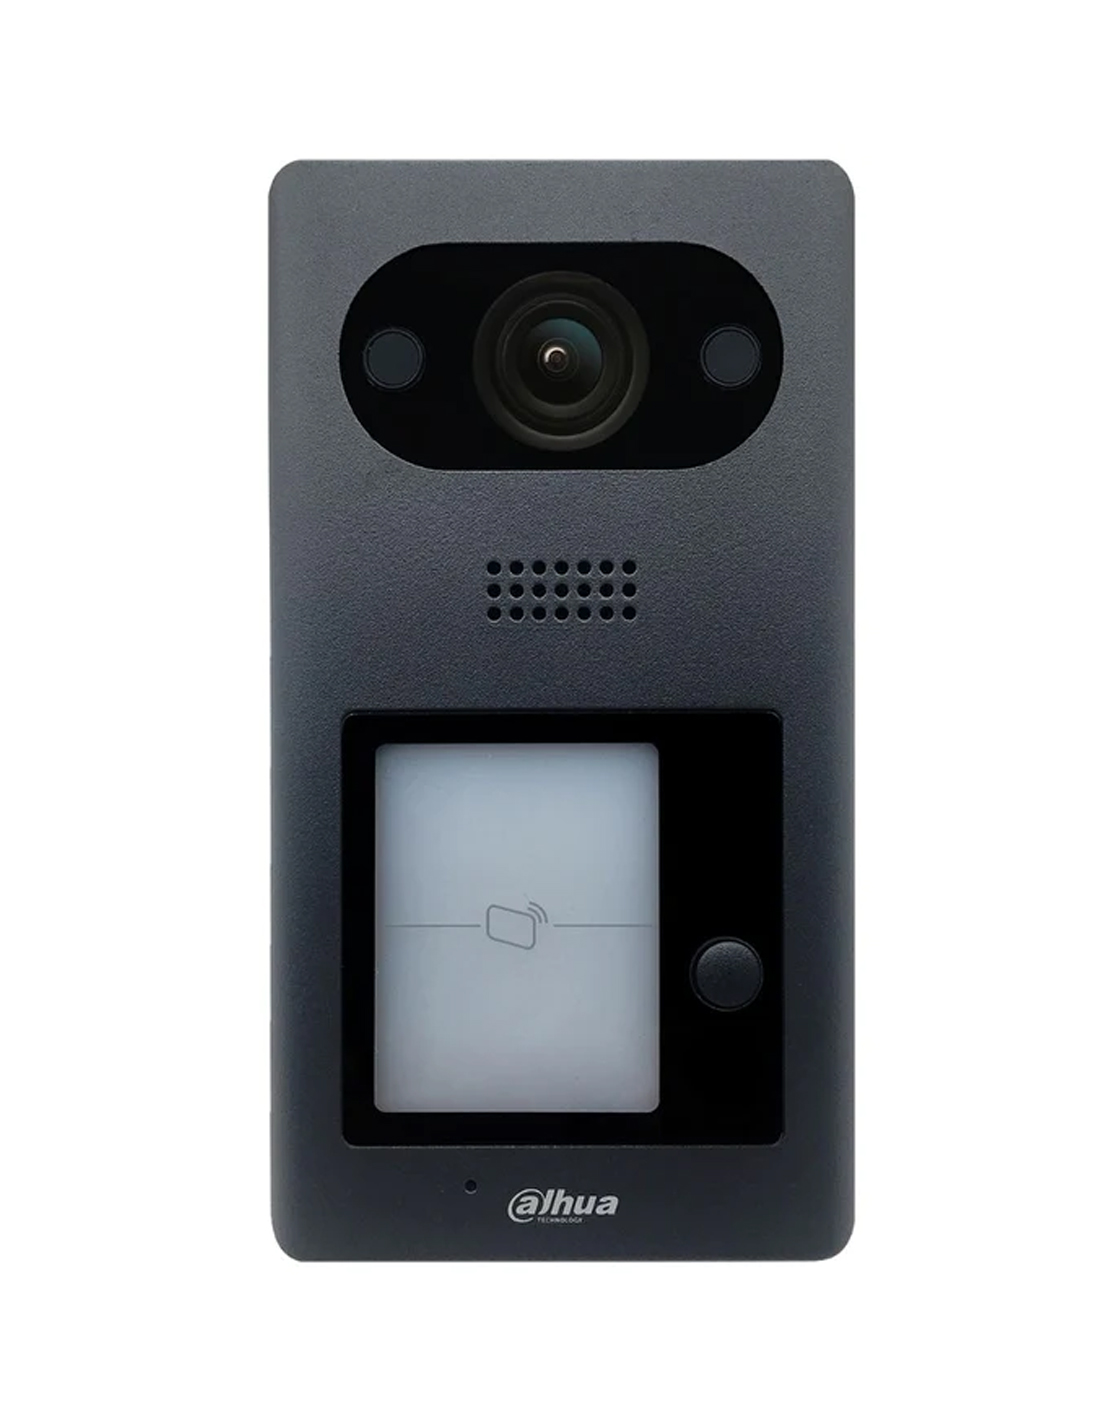 dahua-2mp-ip-vidieo-doorbell-intercom-1-button-single-DHI-VTO3211D-P1-S2.jpg